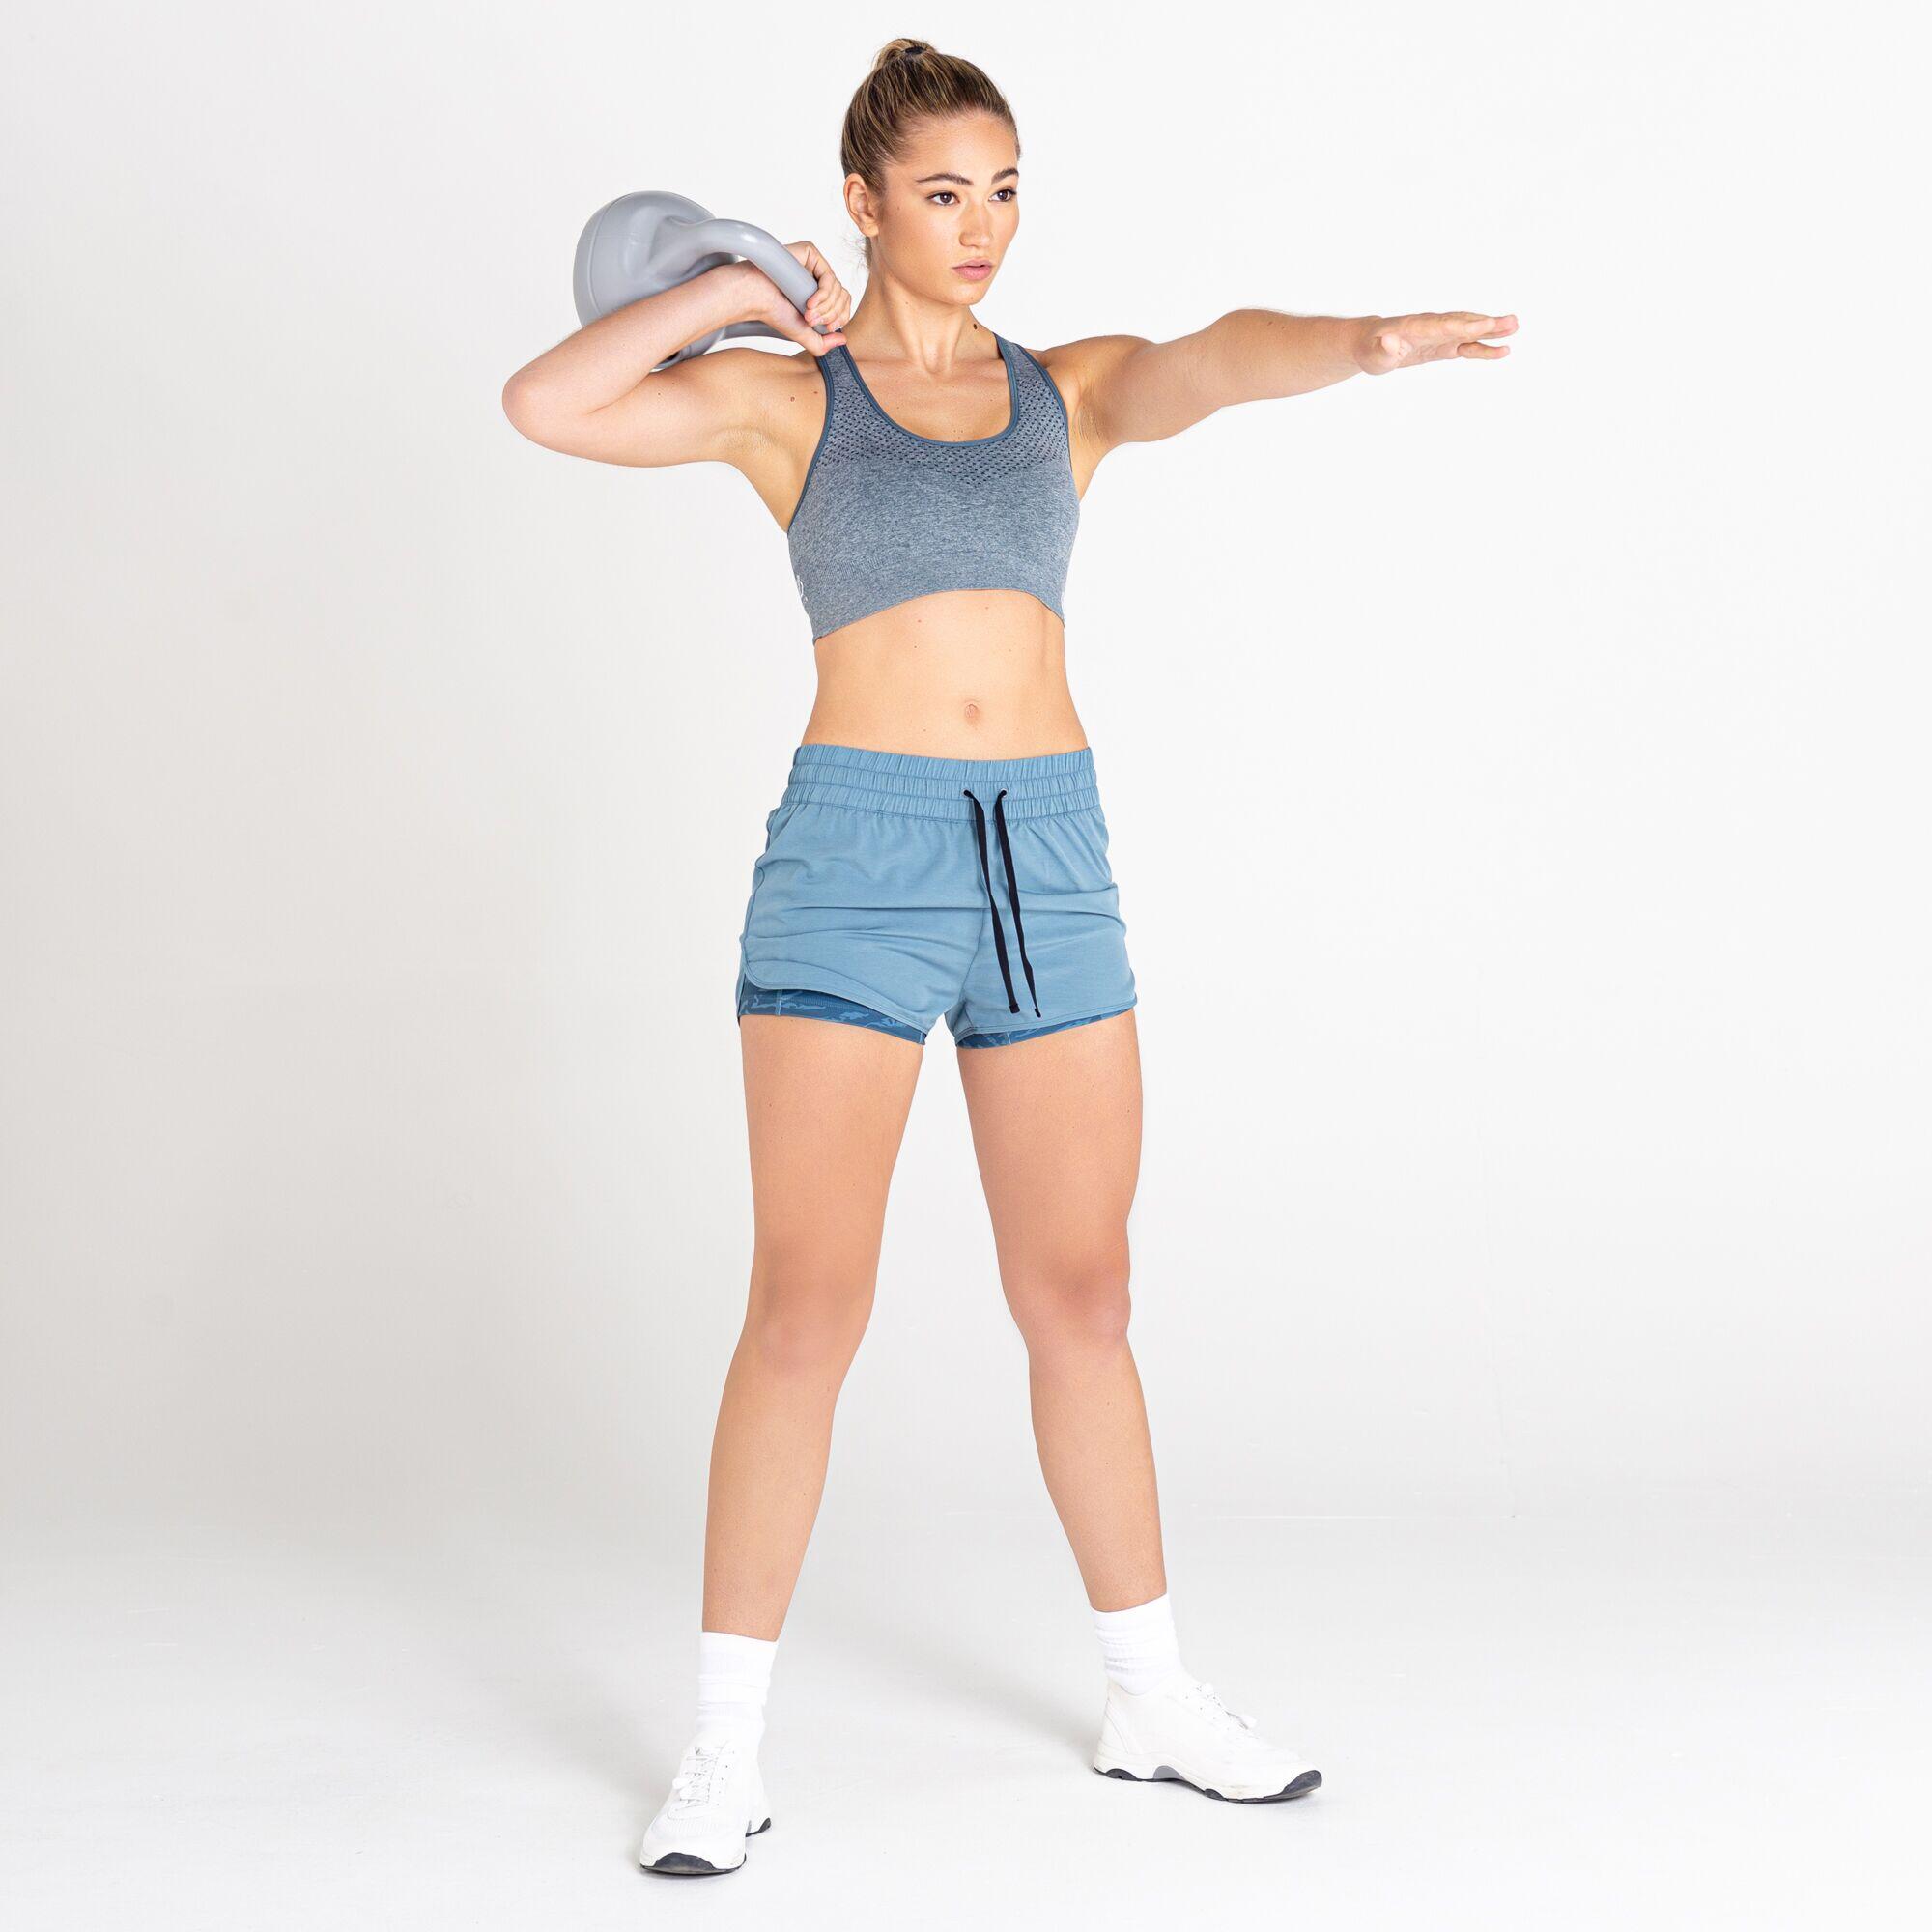 Sprint Up Women's Fitness Shorts - Bluestone / Grey 4/5